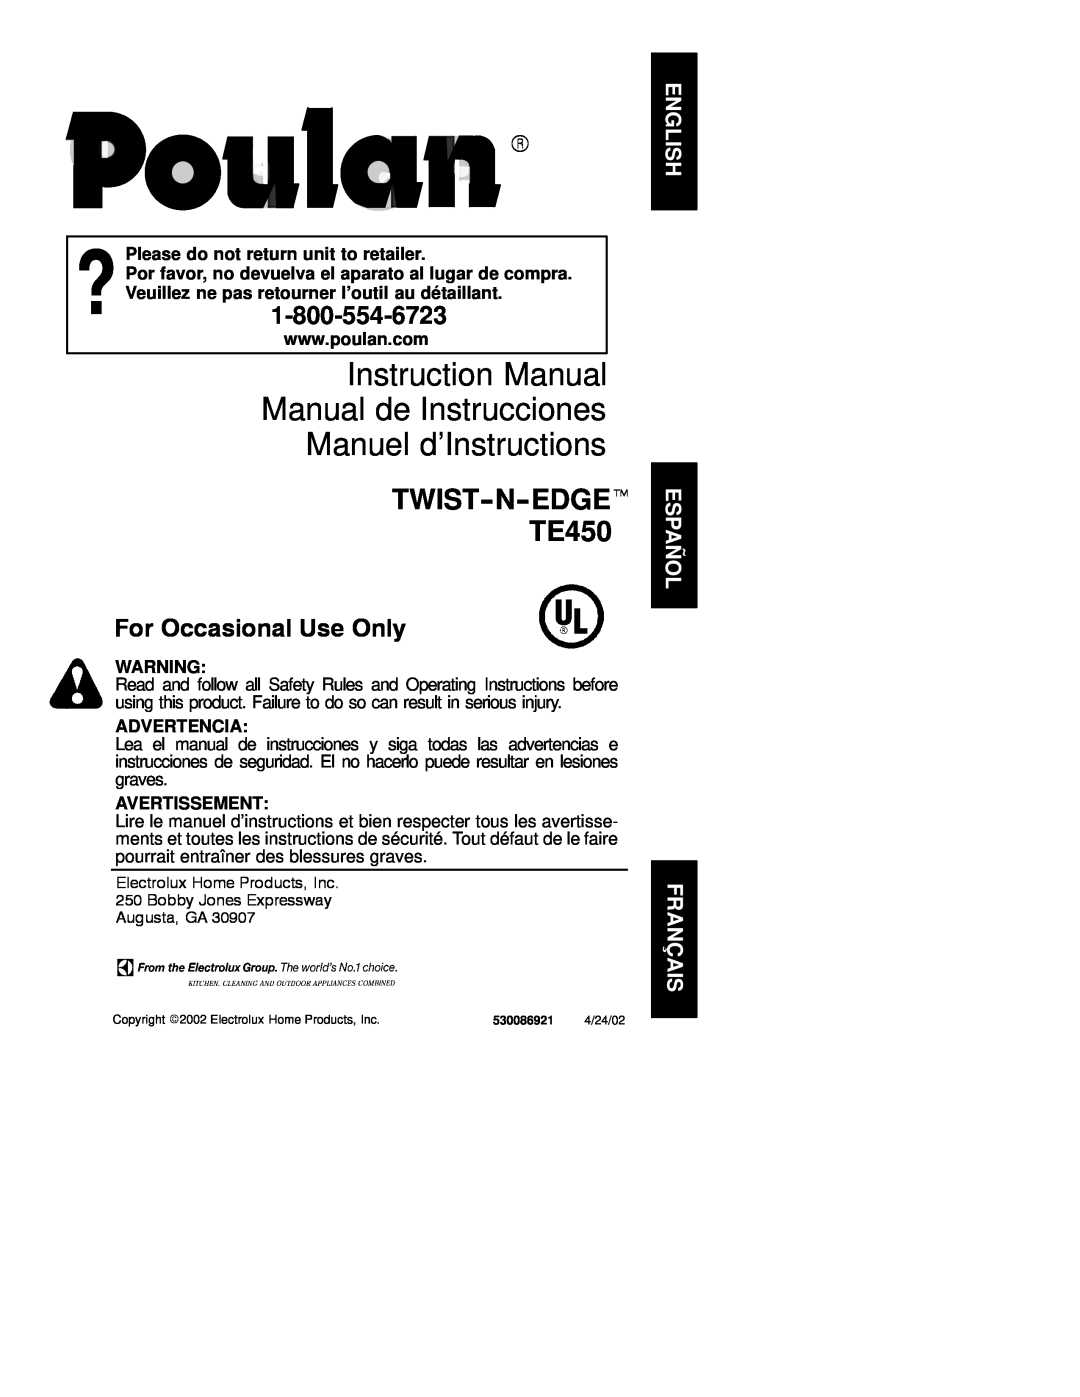 Poulan instruction manual Please do not return unit to retailer, Advertencia, Avertissement, TWIST-N-EDGEt TE450 